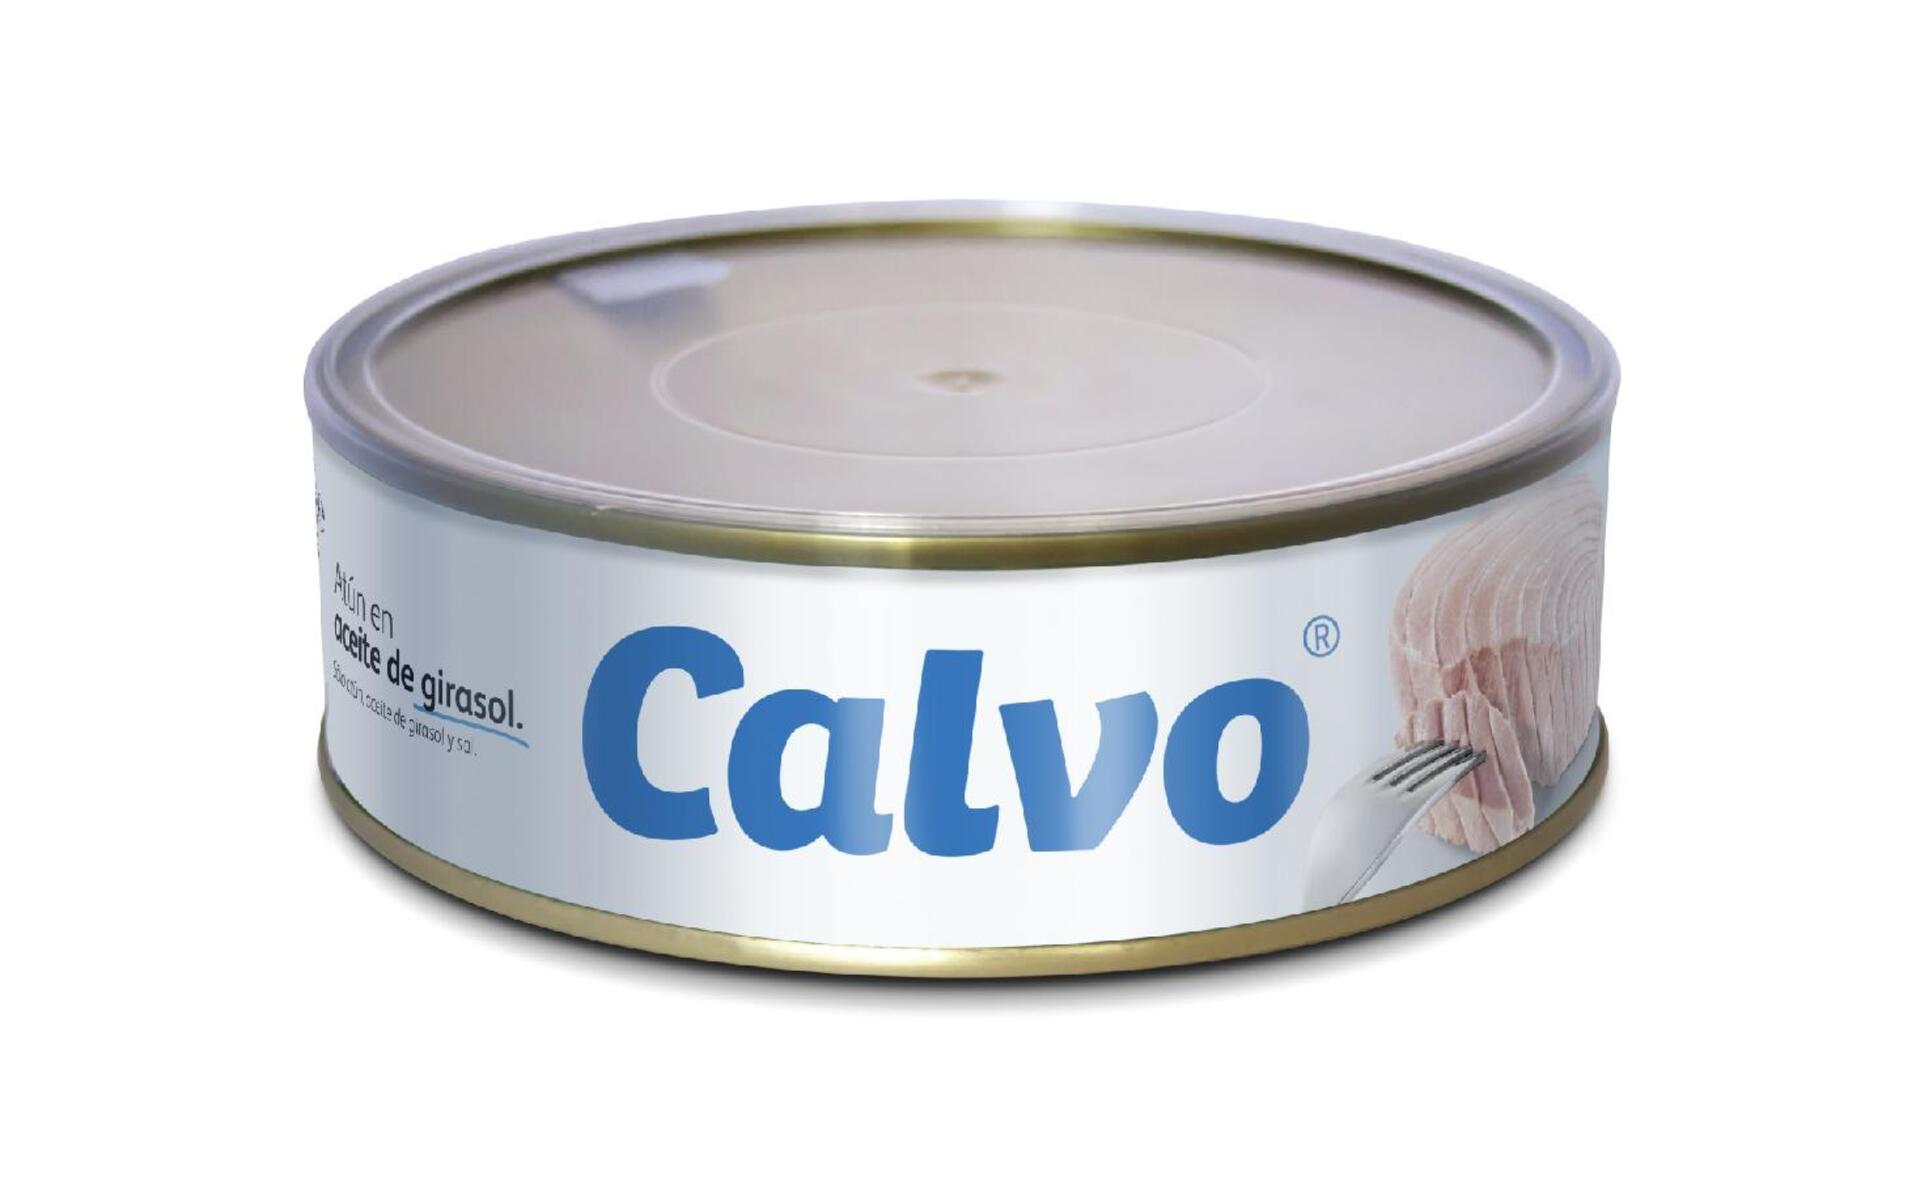 Calvo Tuniak v slnečnicovom oleji 500 g